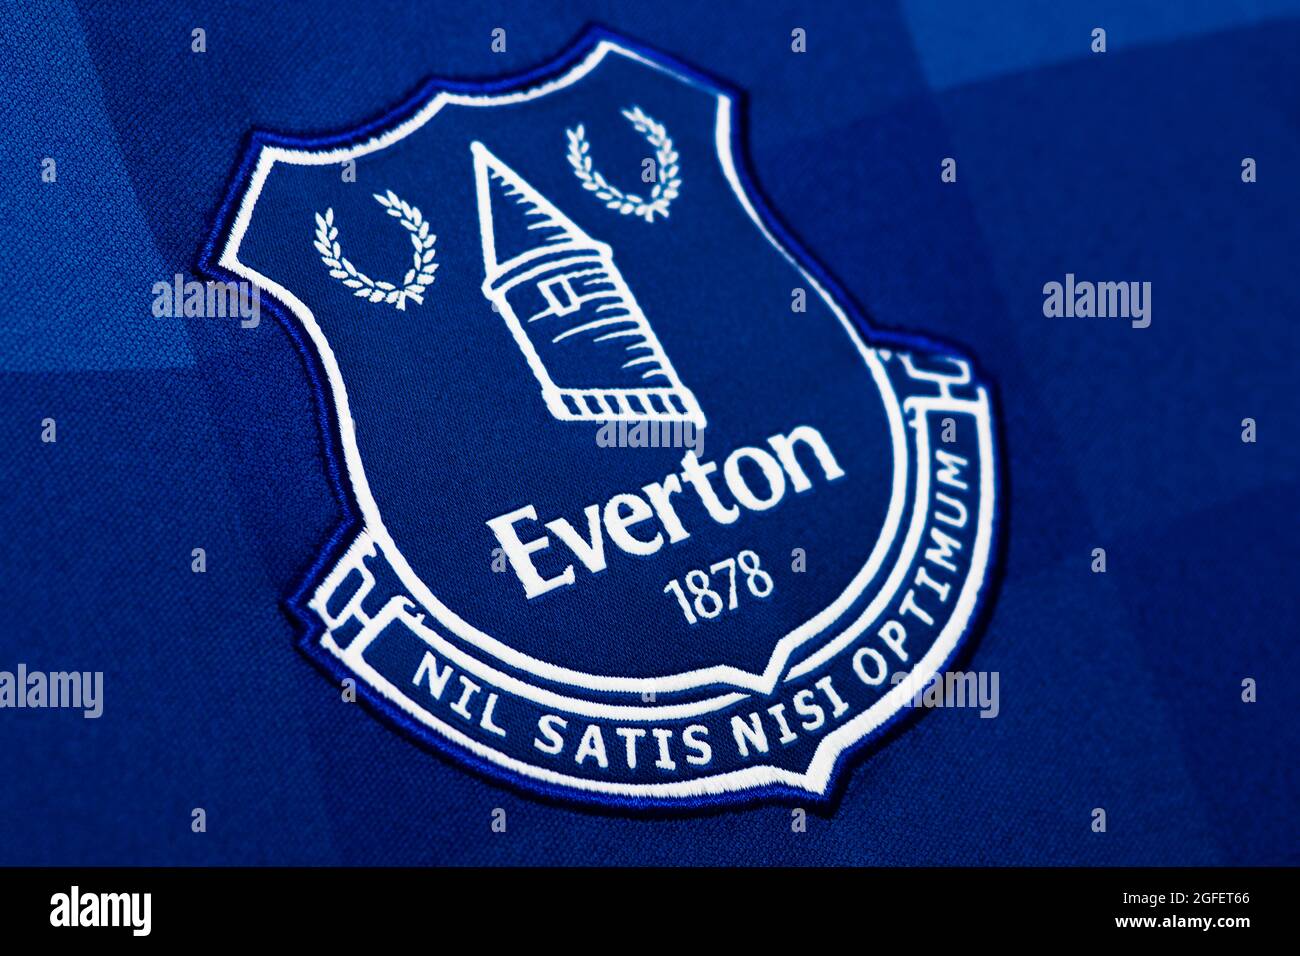 Primer plano del kit Everton FC 2020/21. Foto de stock